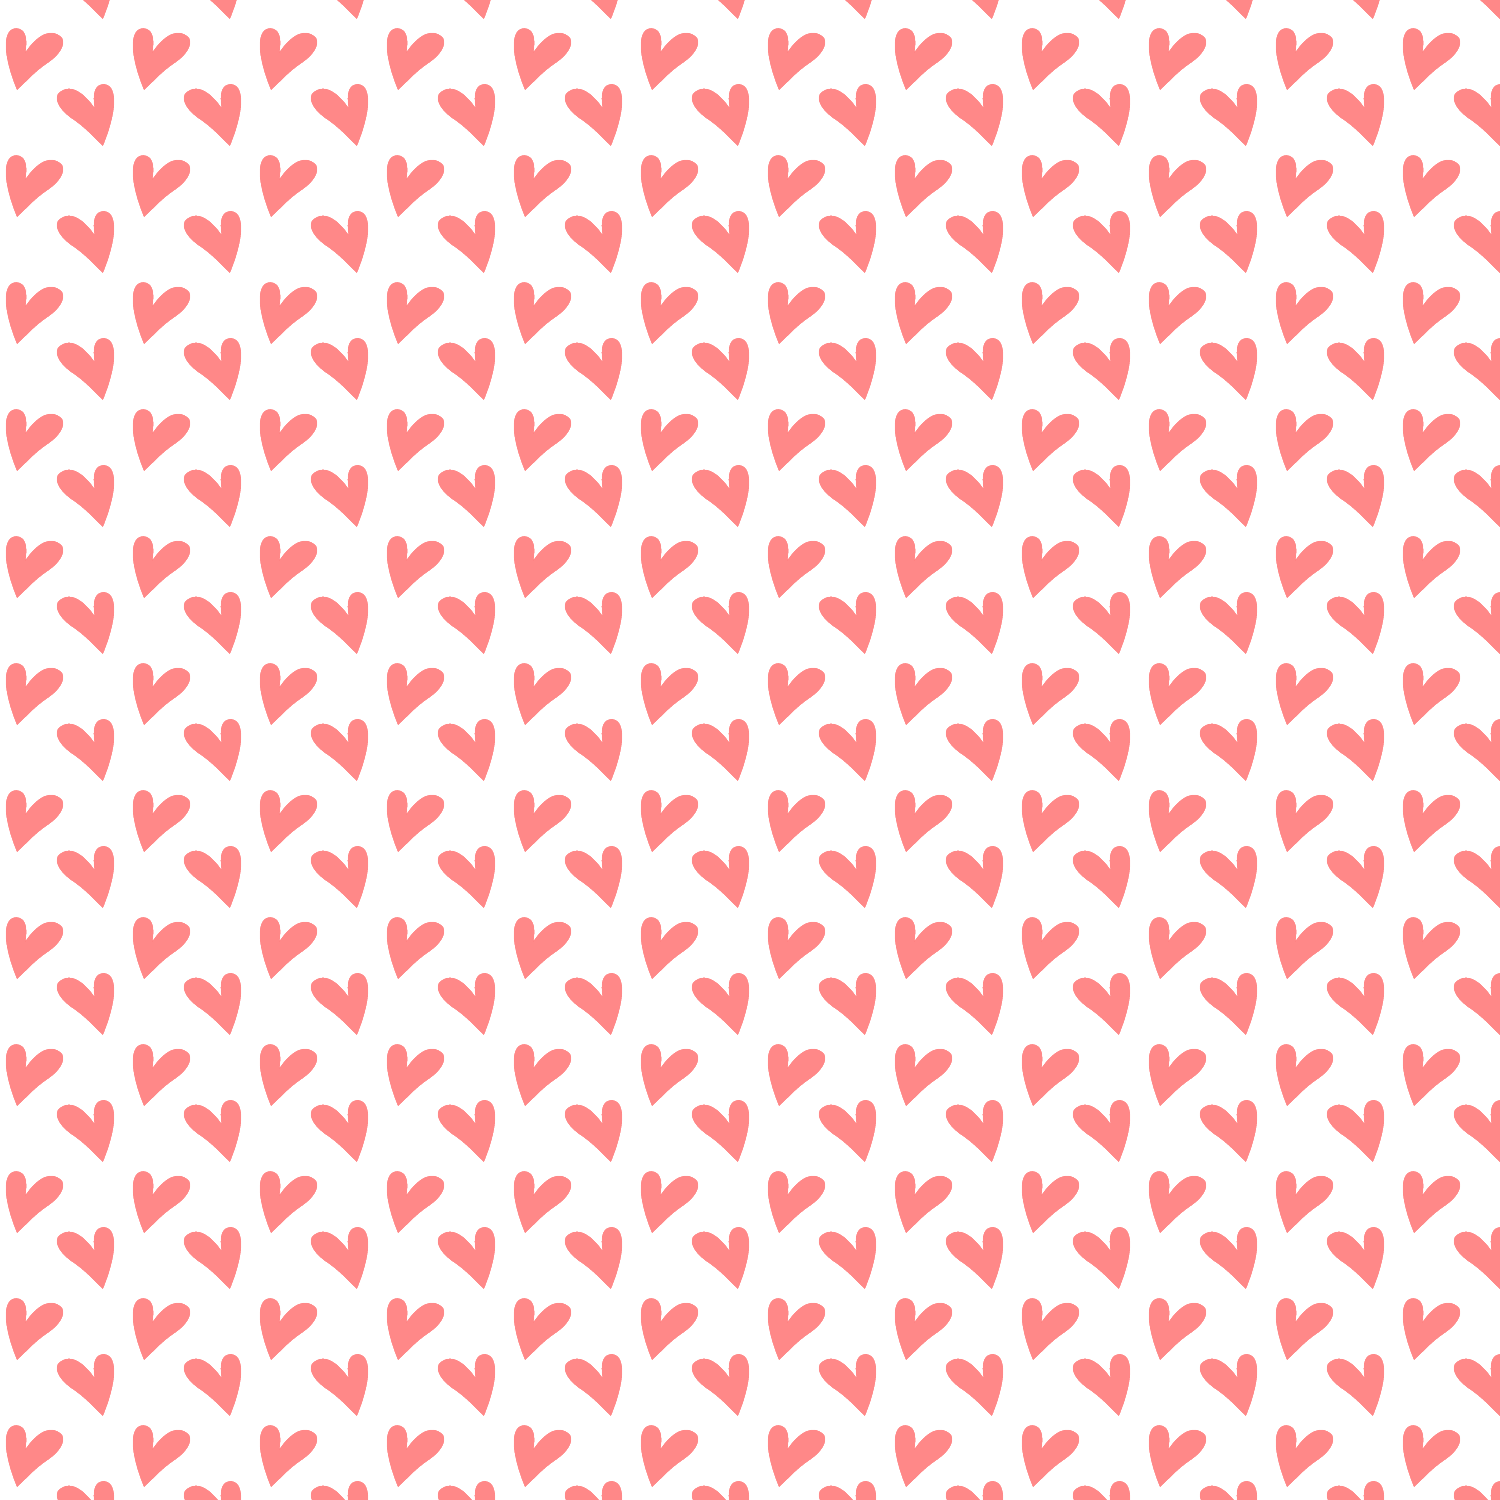 Polka dot Wallpaper - Pink heart seamless background png download -  1500*1500 - Free Transparent Polka Dot png Download. - Clip Art Library